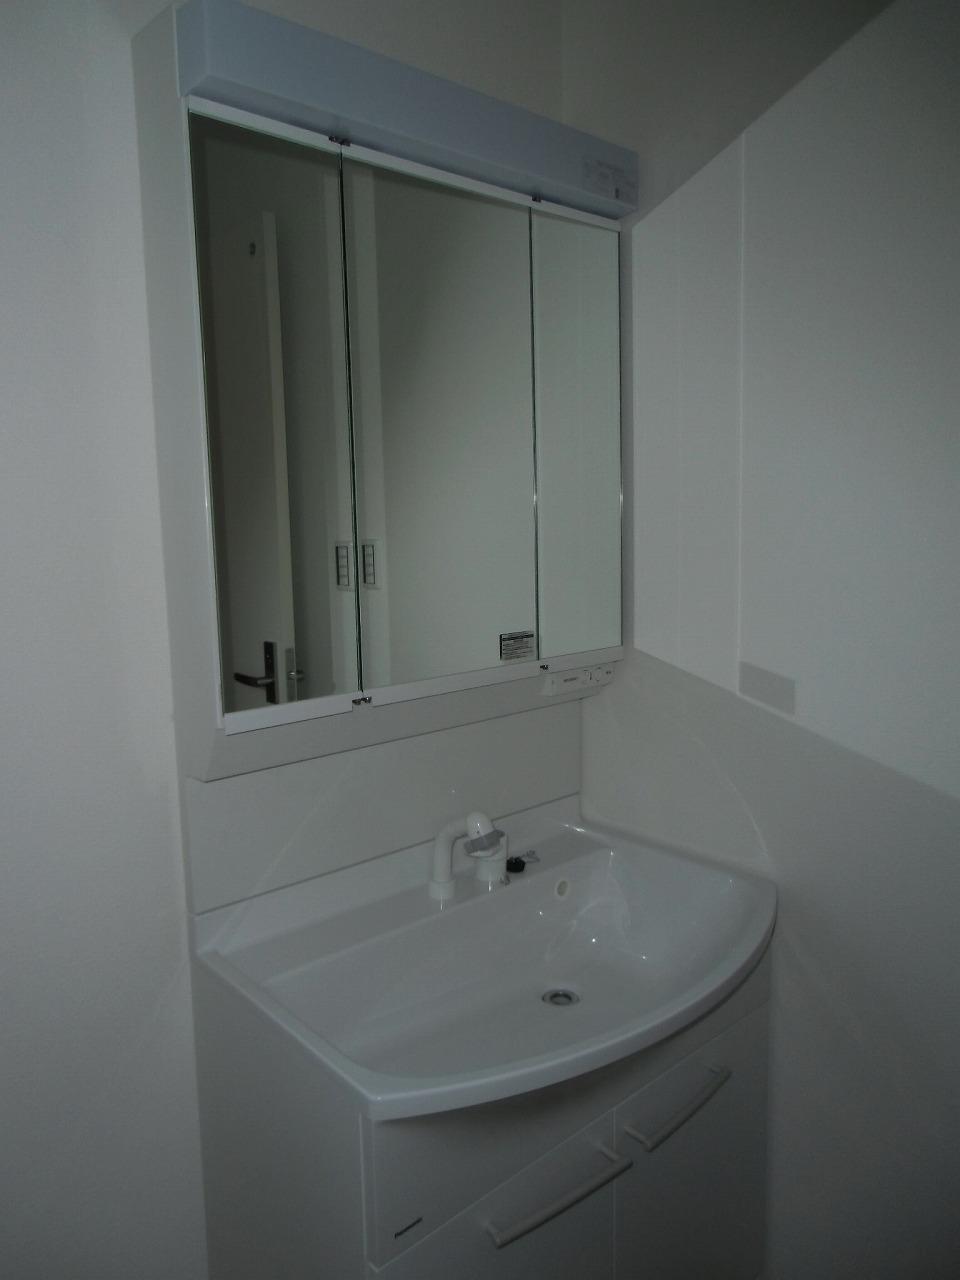 Wash basin, toilet. 2013.11.8 shooting